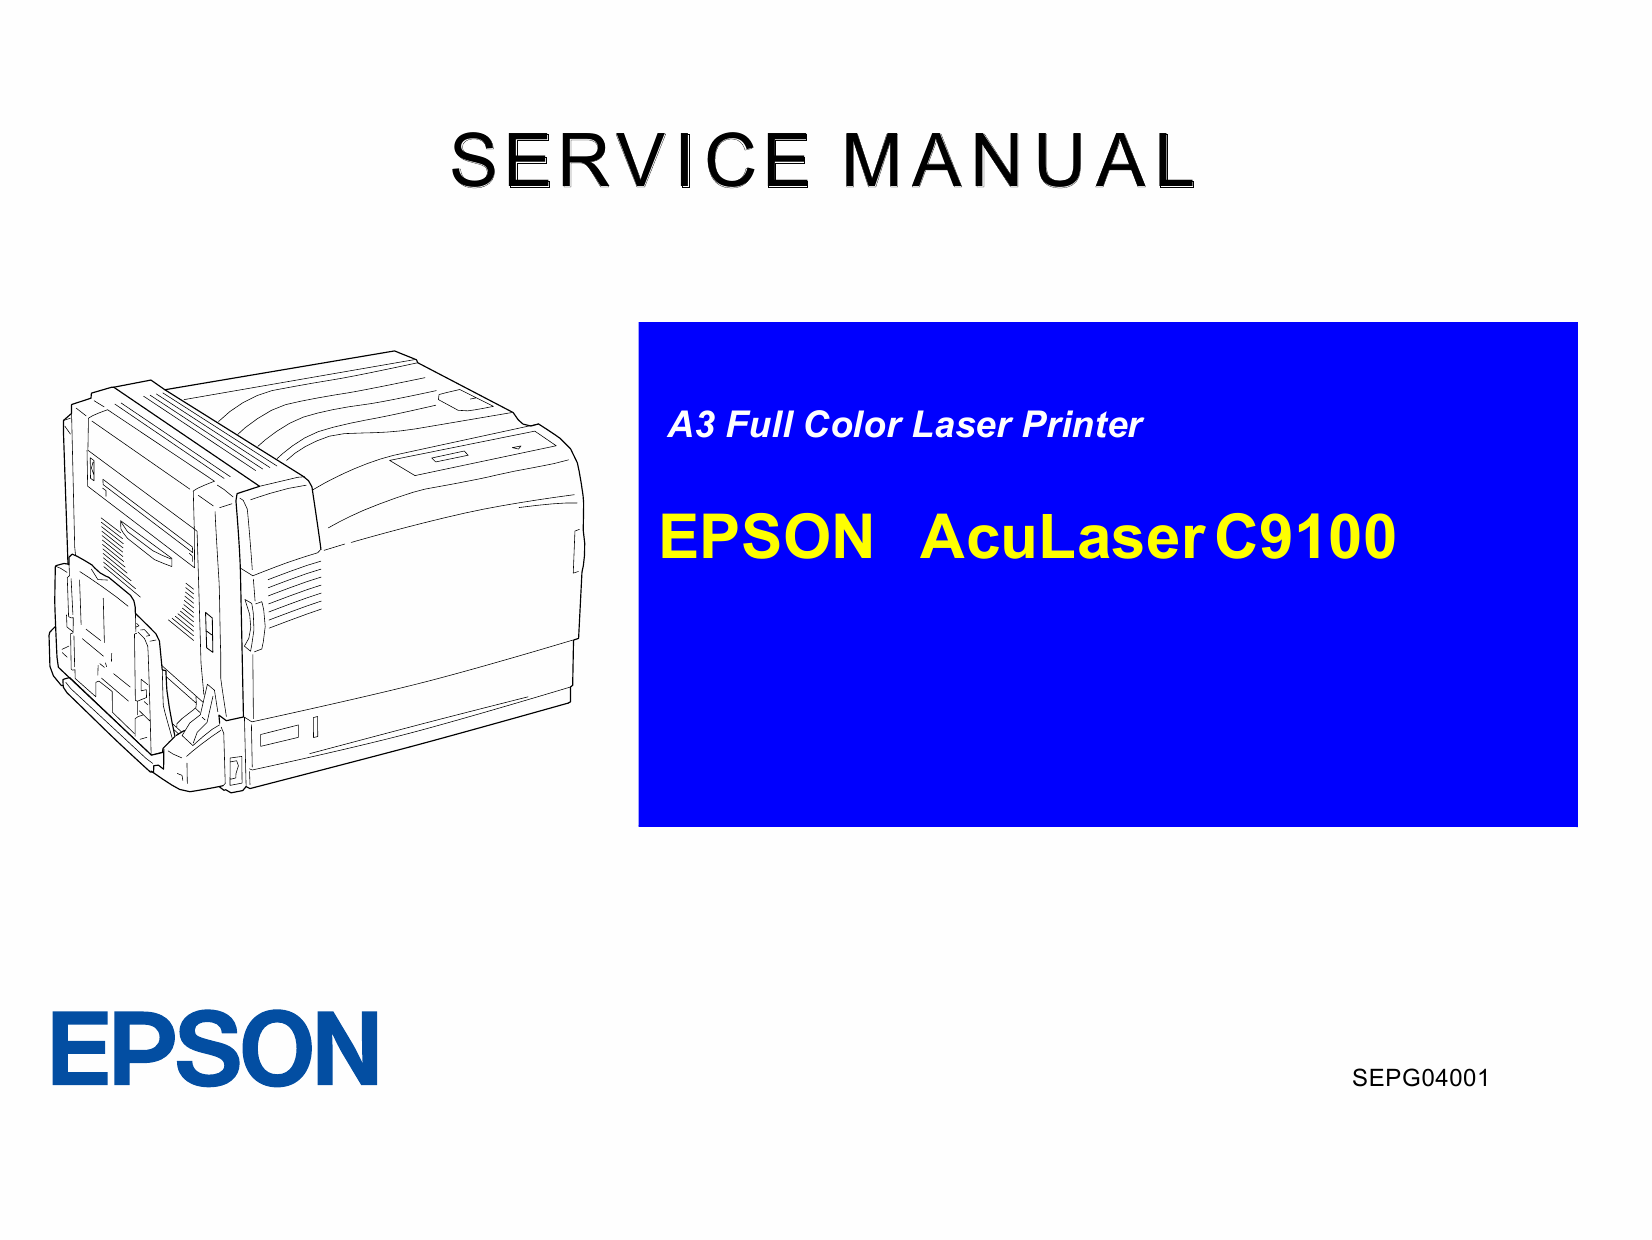 EPSON AcuLaser C9100 Service Manual-1